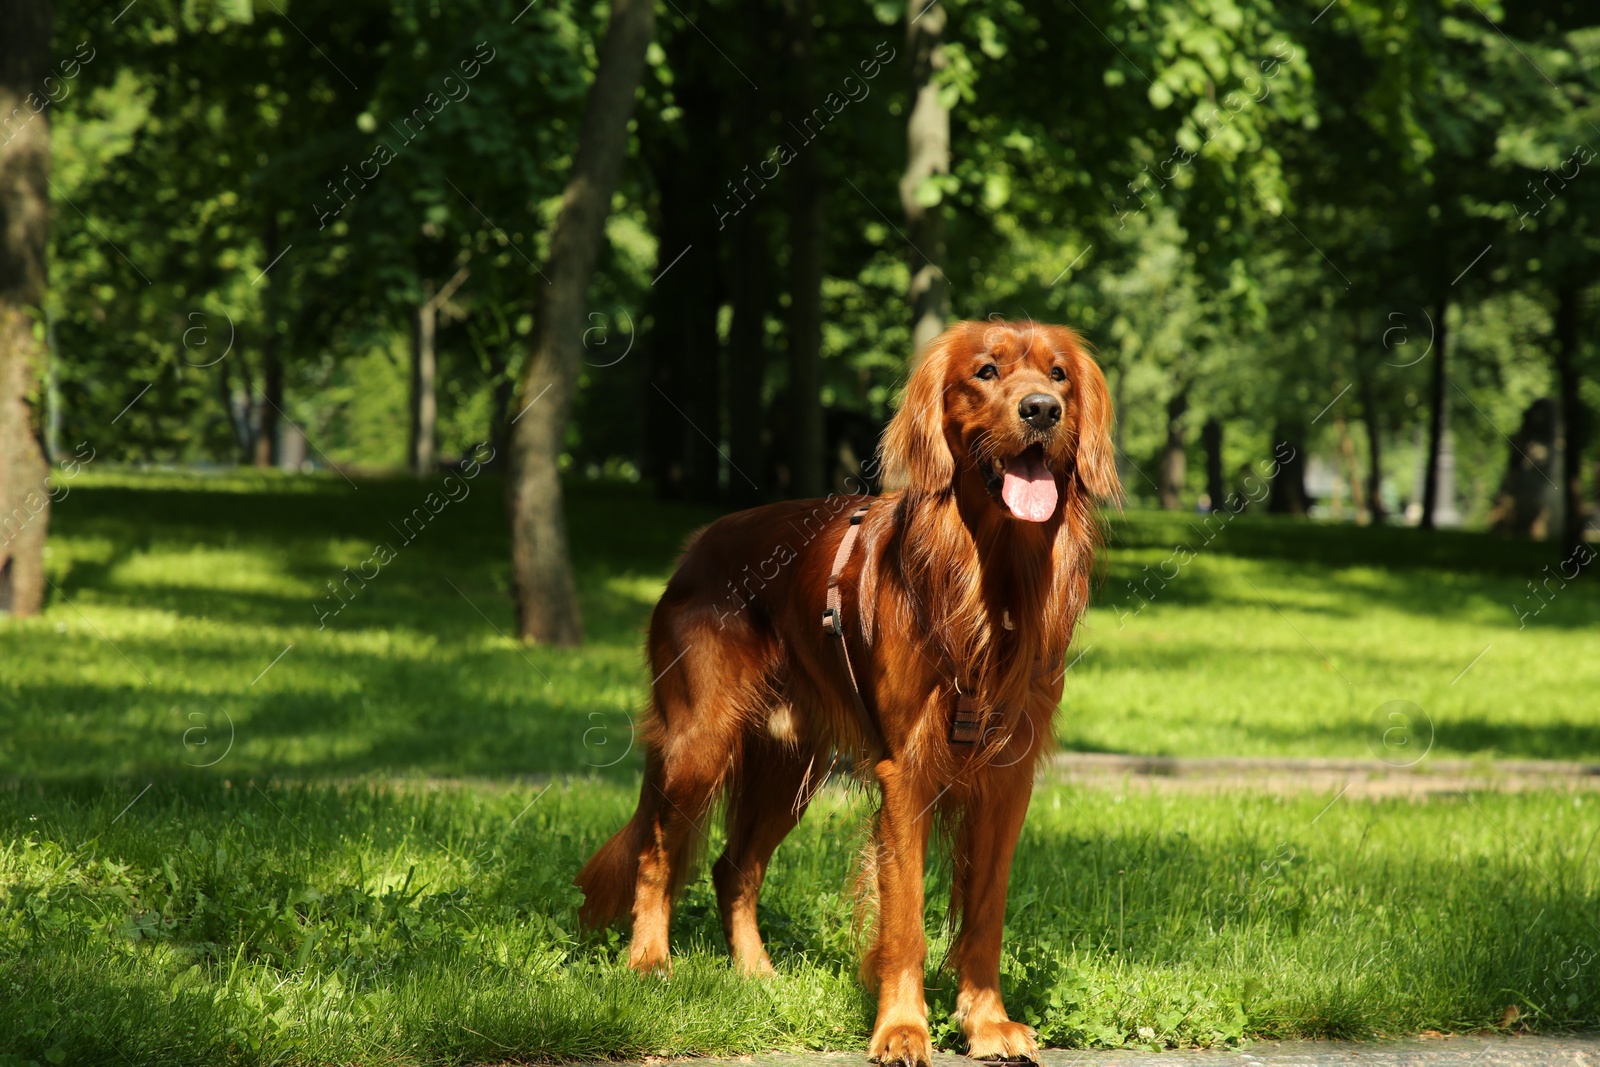 Photo of Cute Irish Setter on green grass outdoors. Dog walking